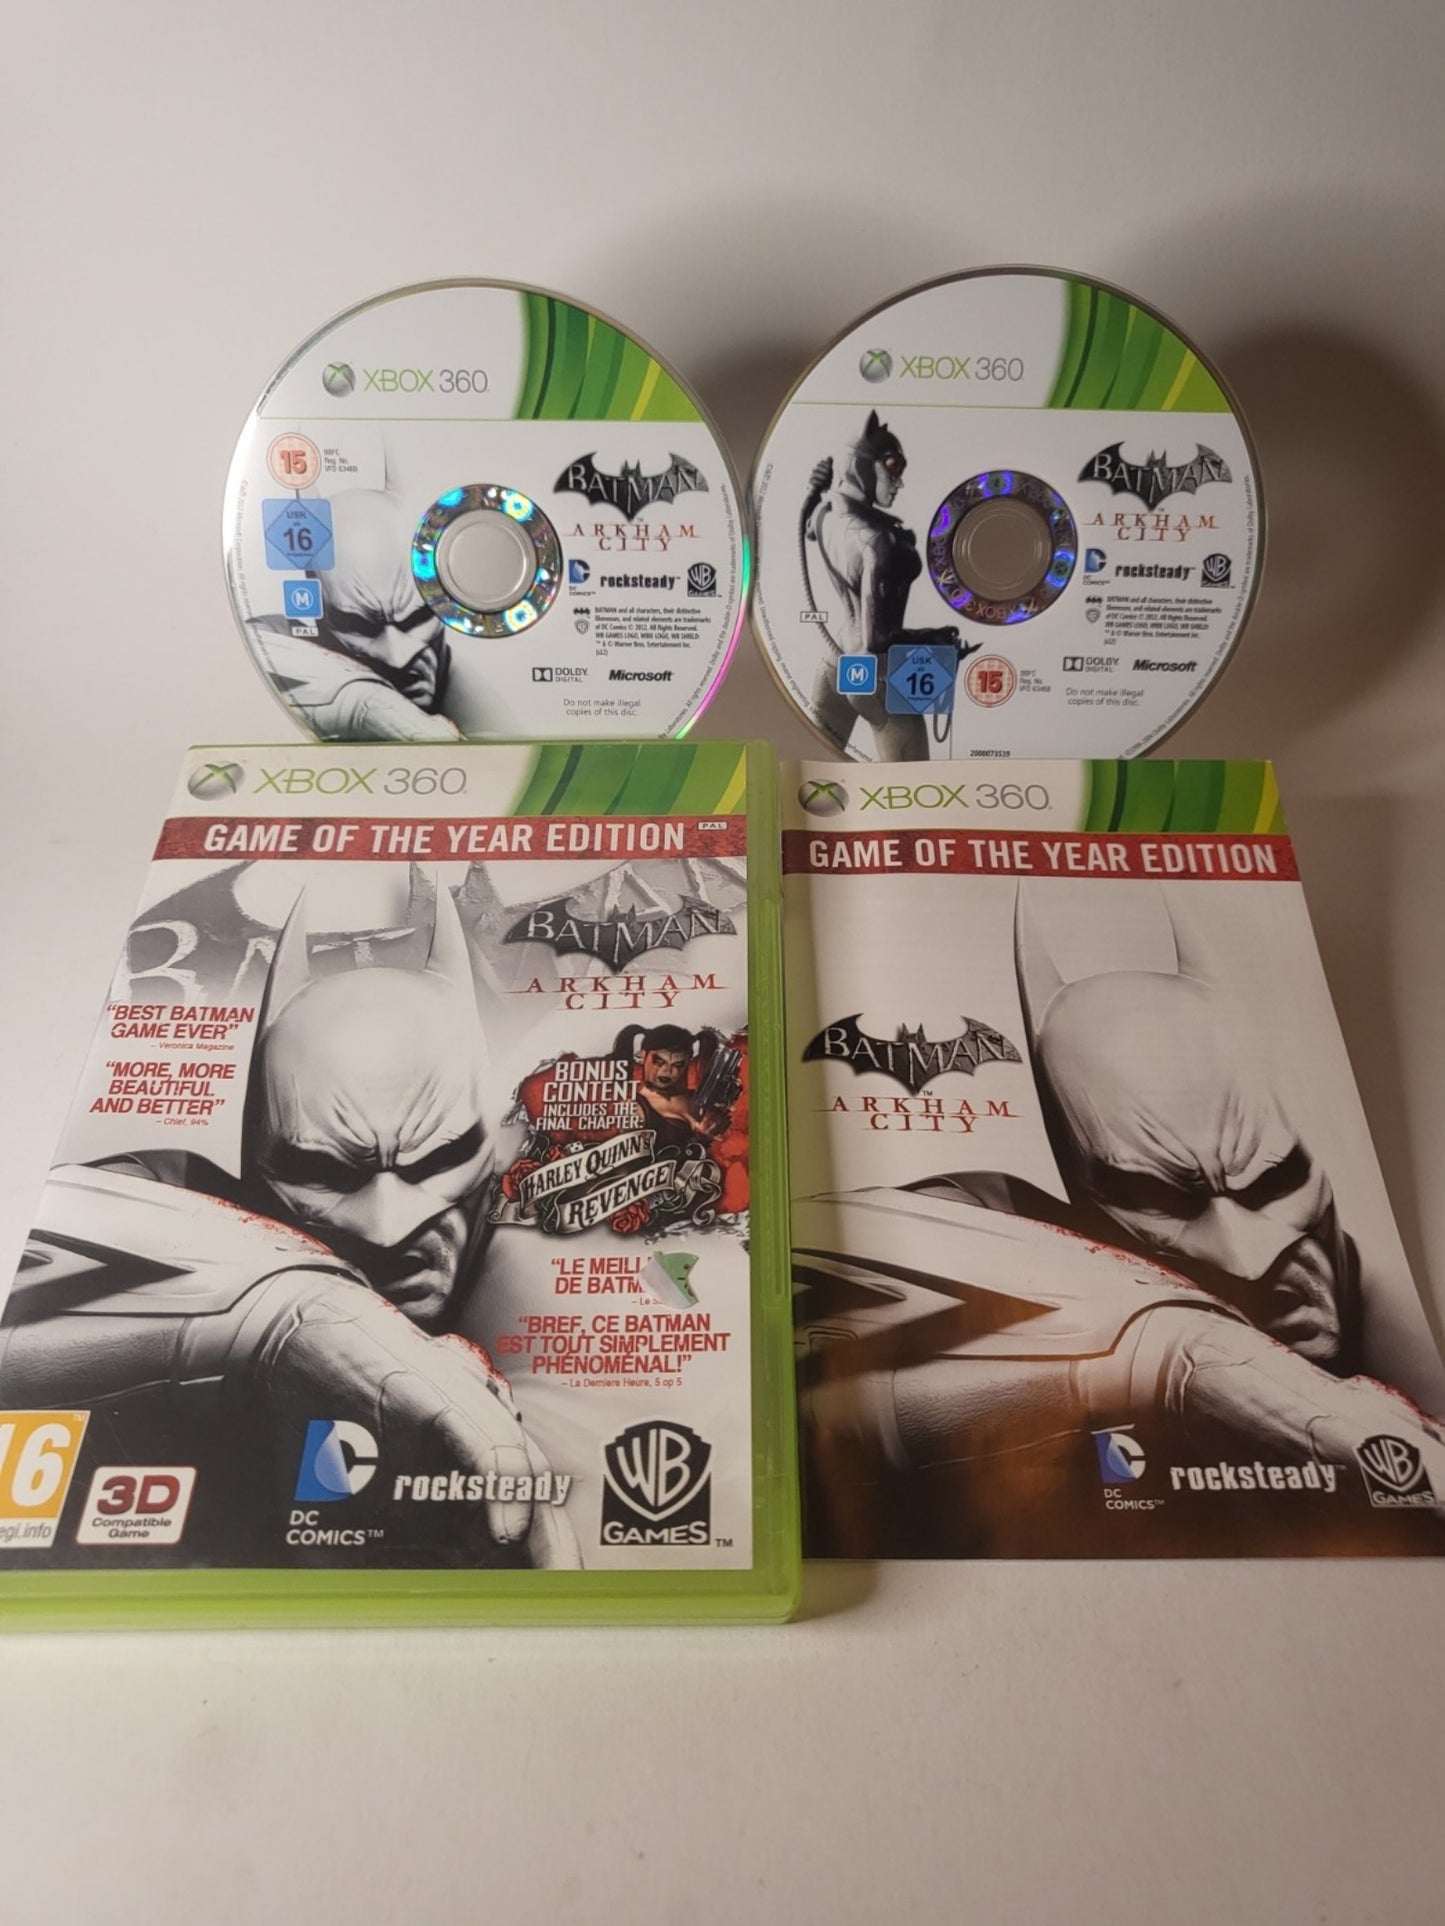 Batman Arkham City GOTY Xbox 360